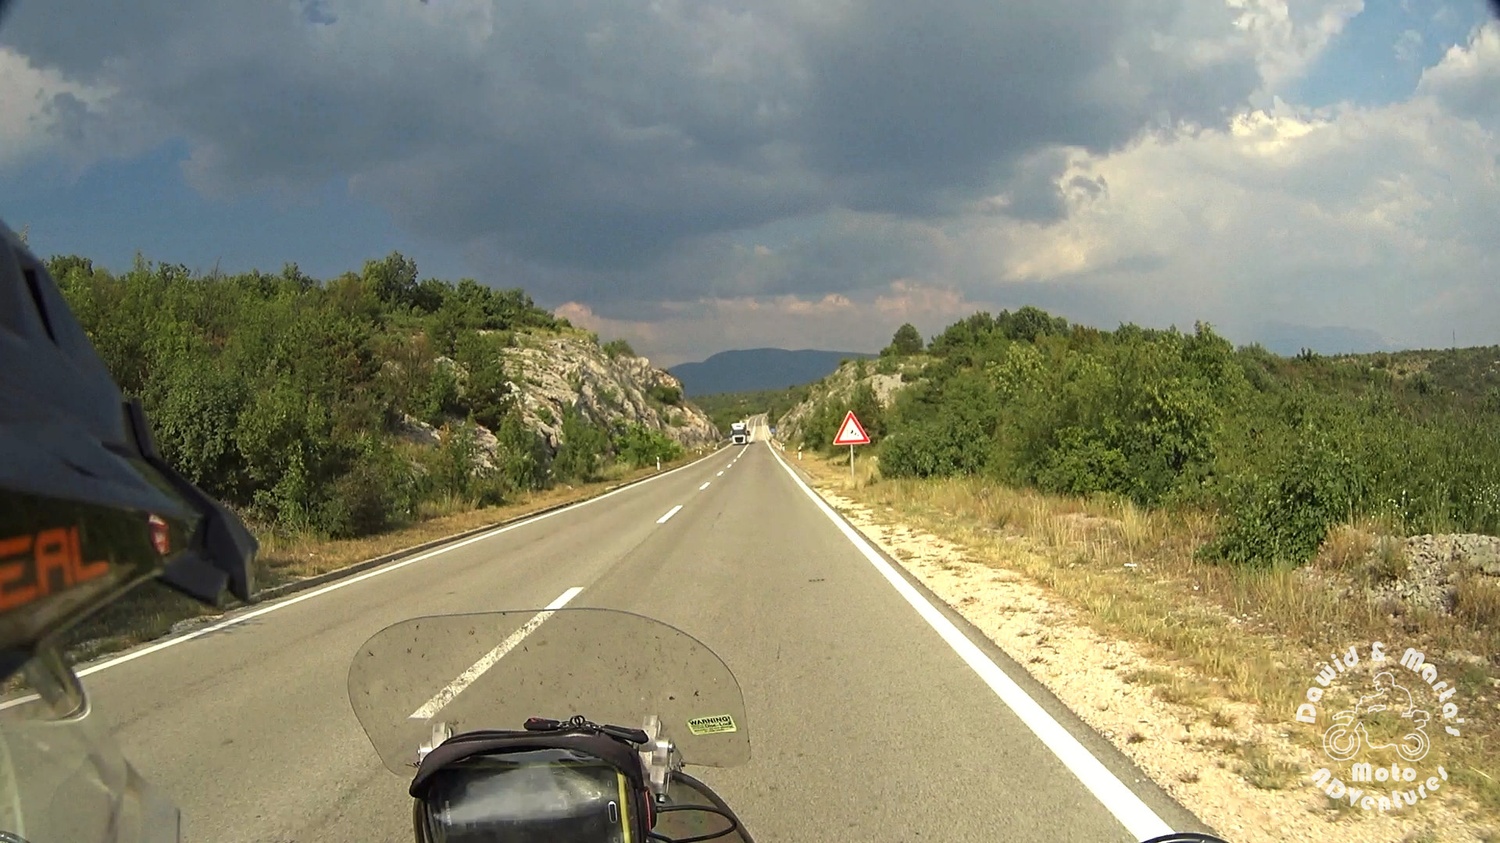 Riding to the Izvor Cetine, inland Croatia